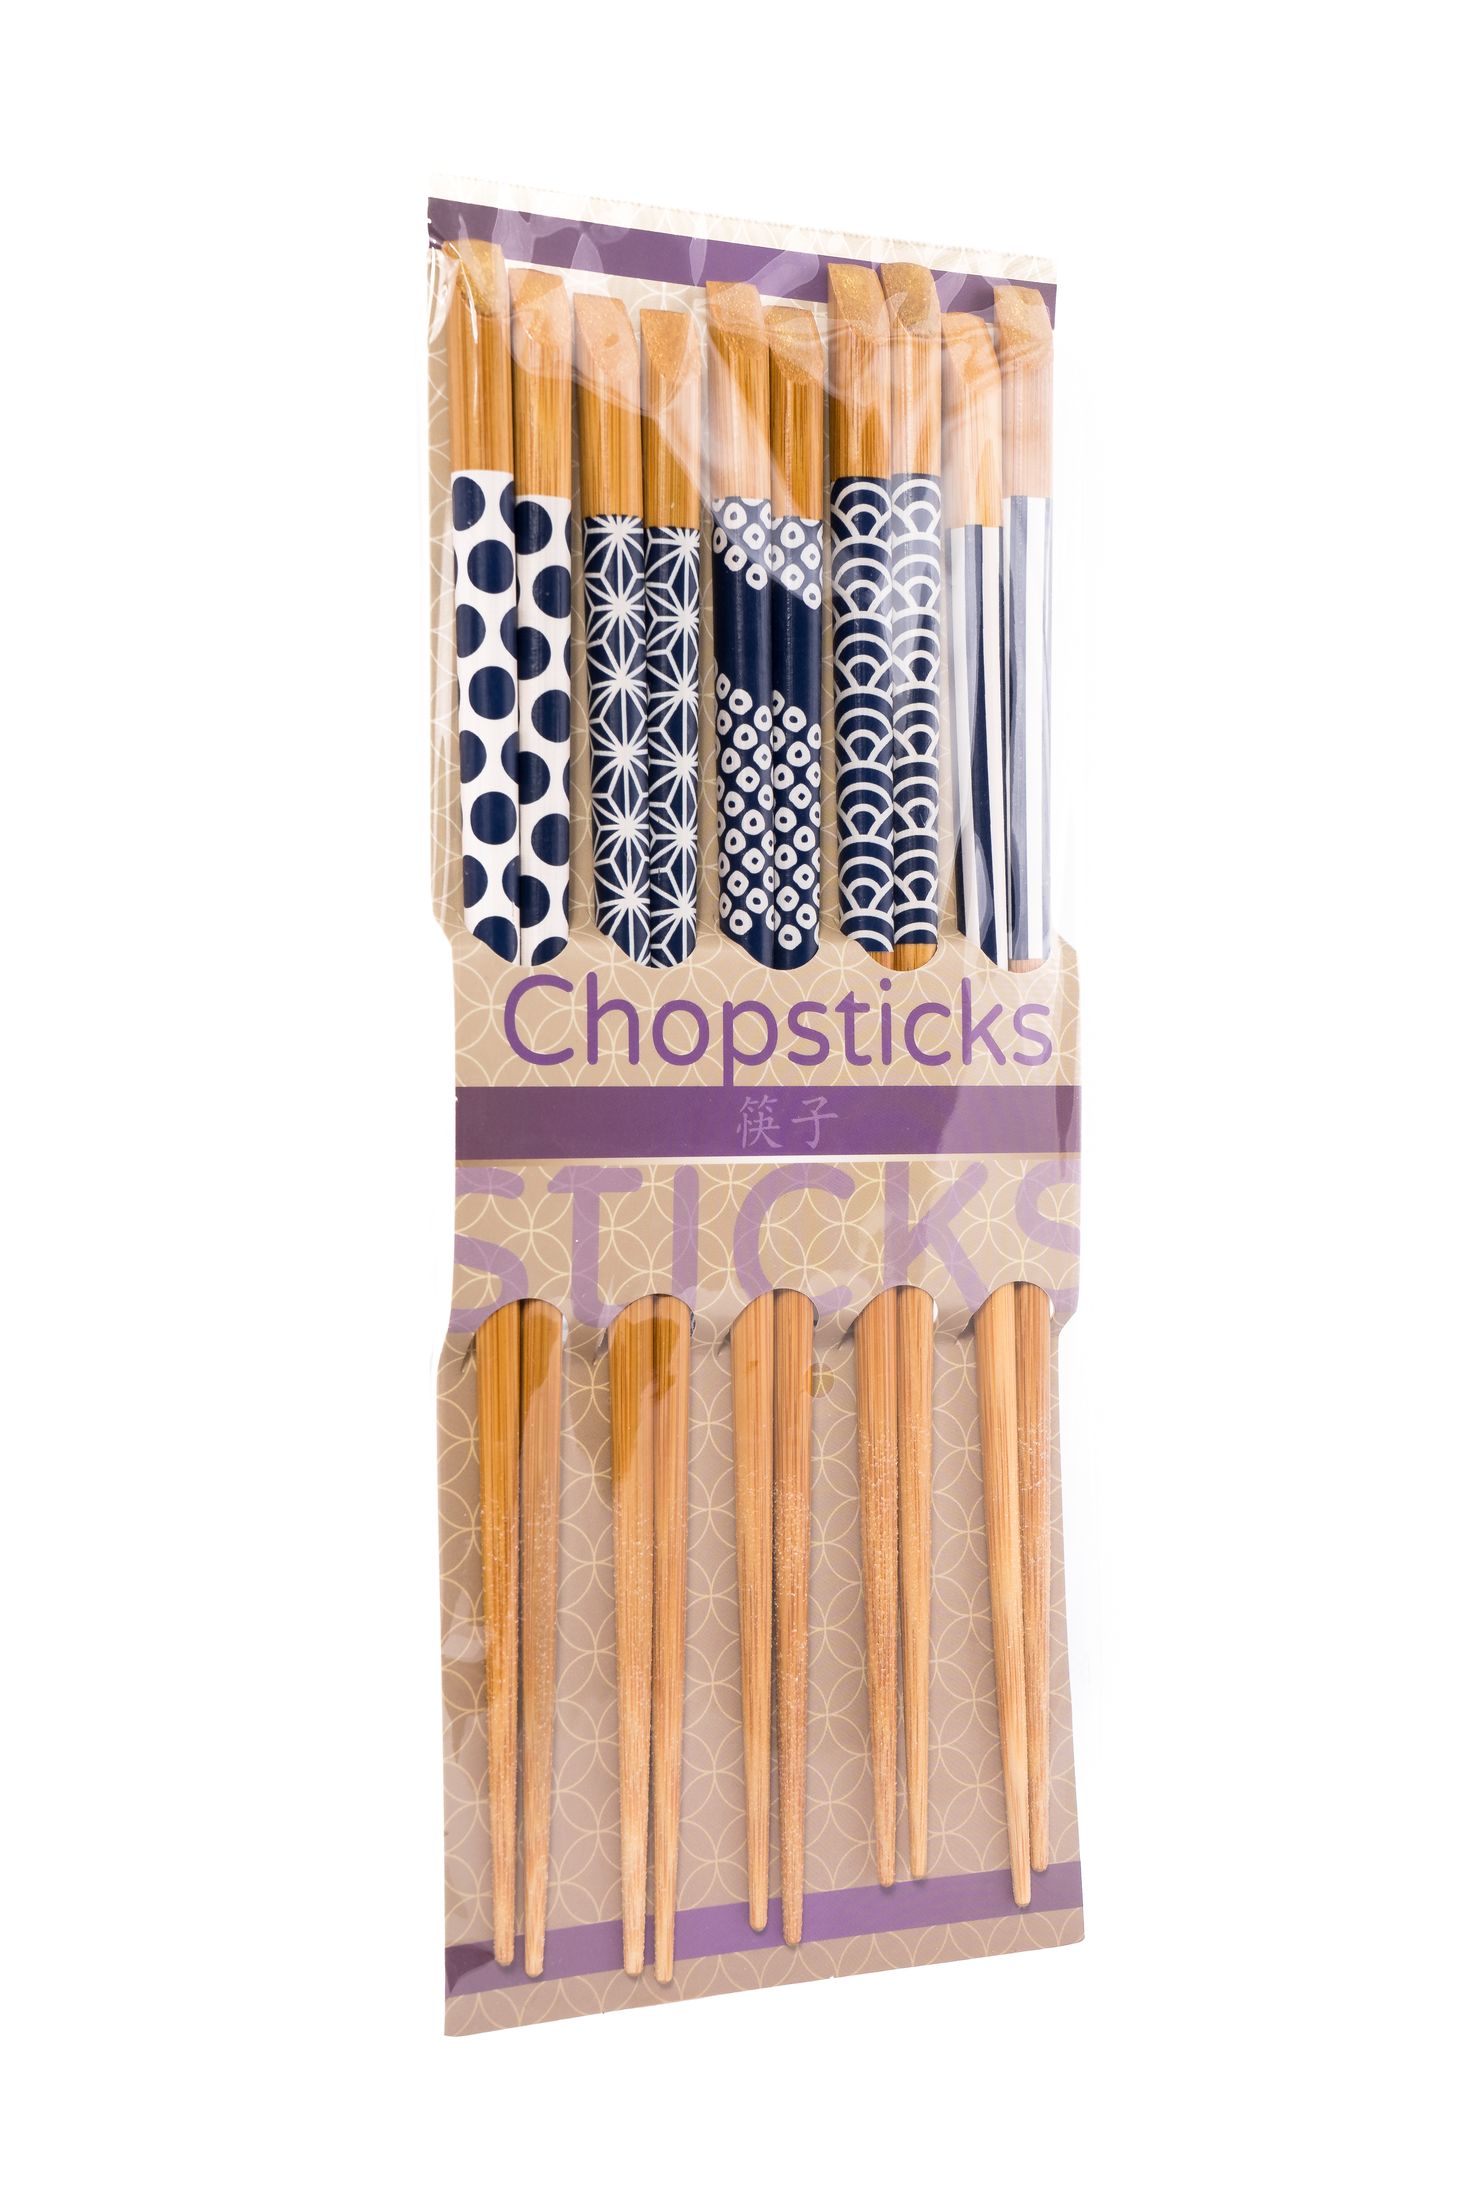  Chopsticks blue decorations